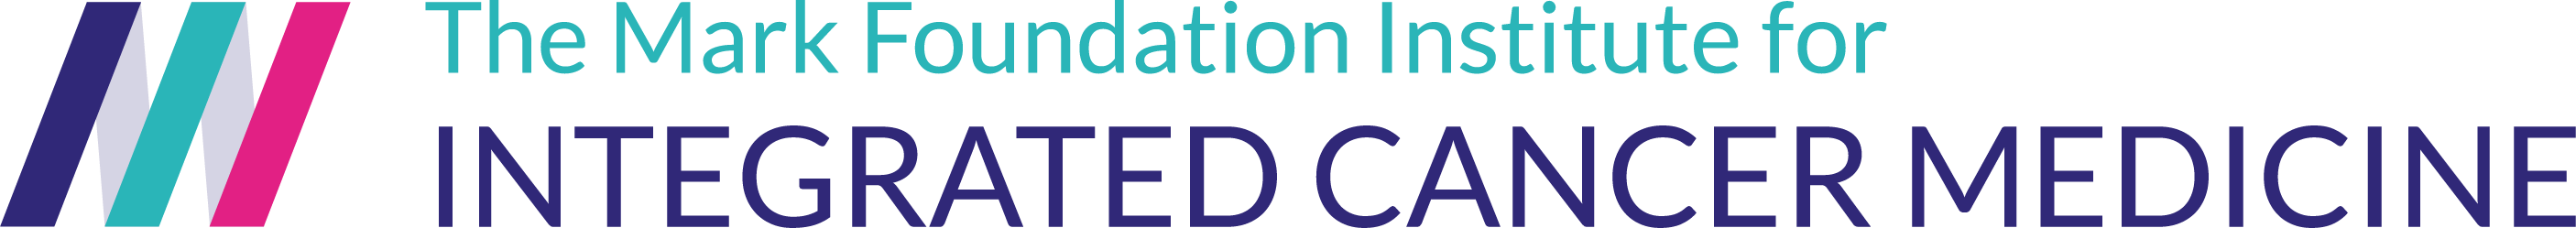 The Mark Foundation Institute for Integrated Cancer Medicine logo.